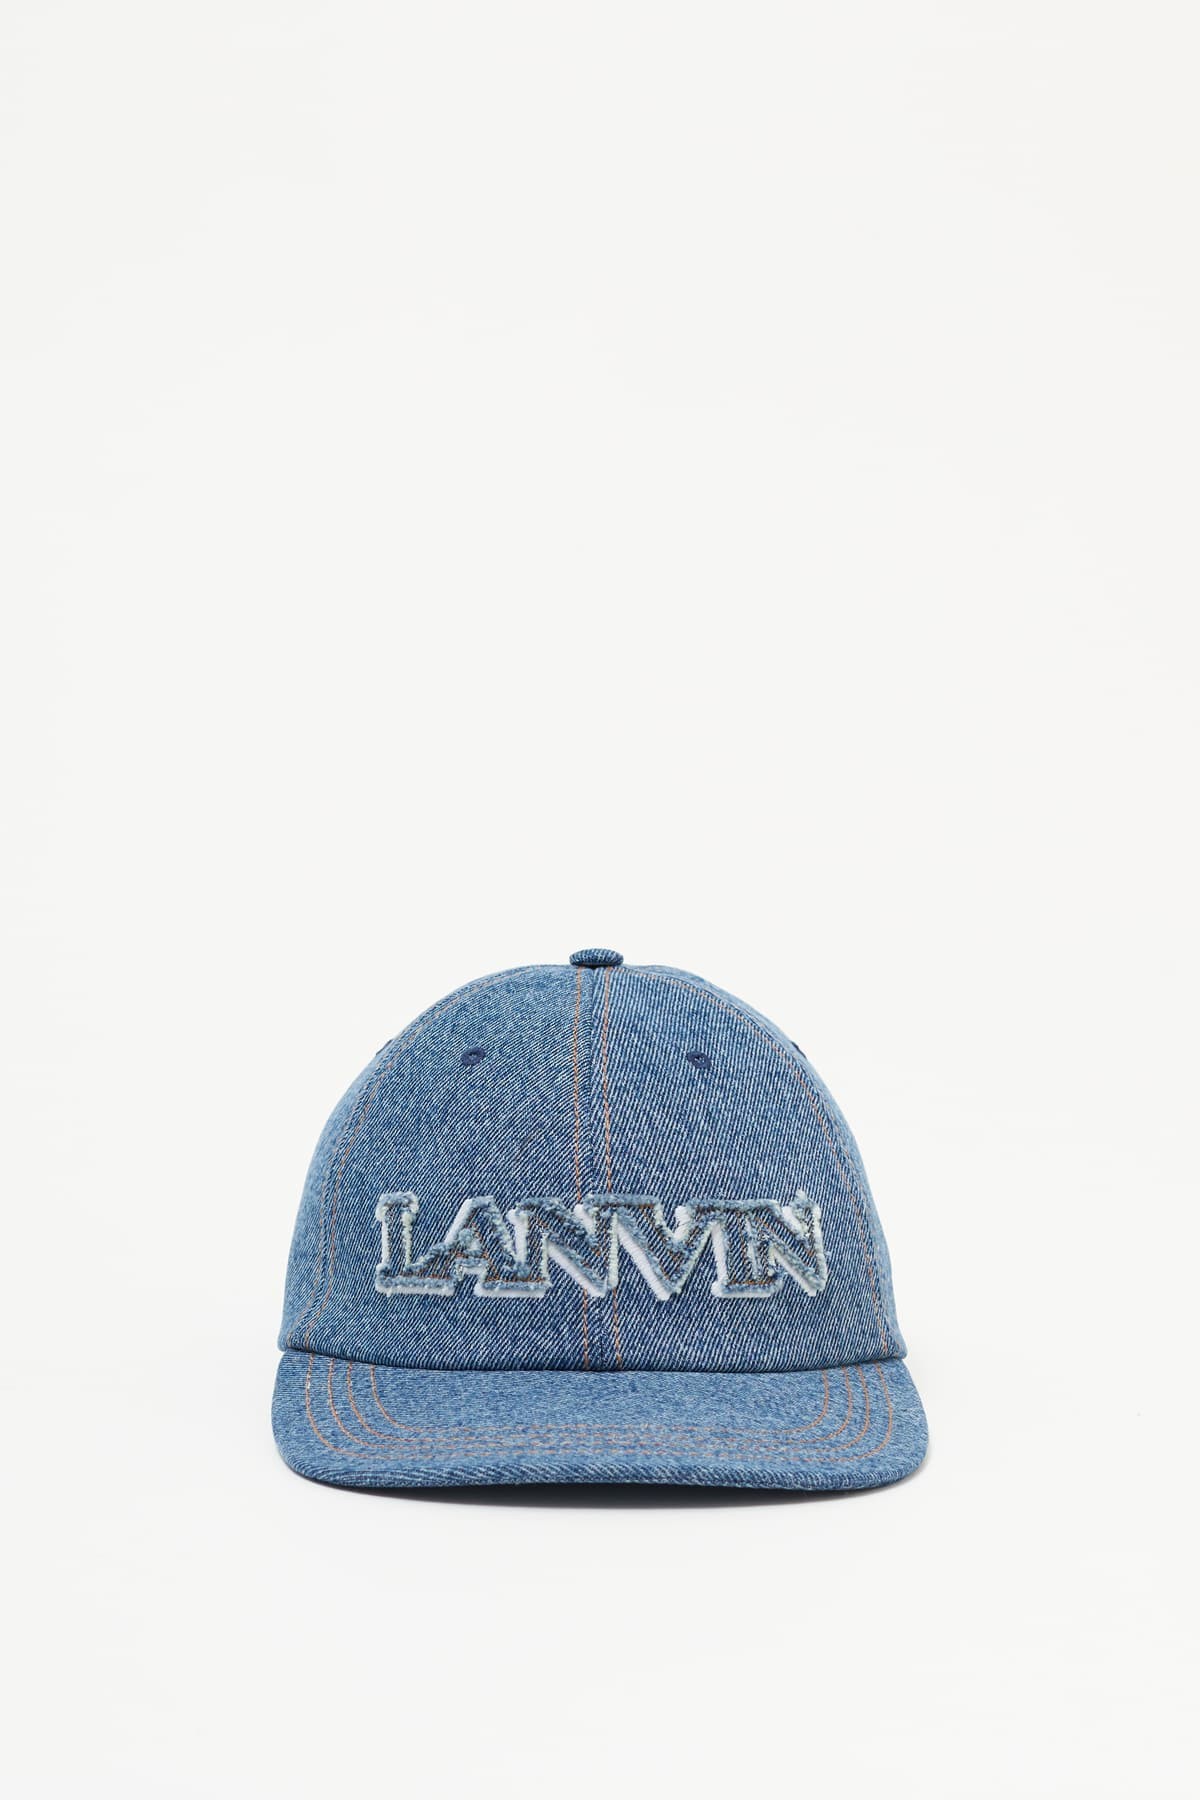 LANVIN BLUE DENIM BASEBALL CAP IAMNUE